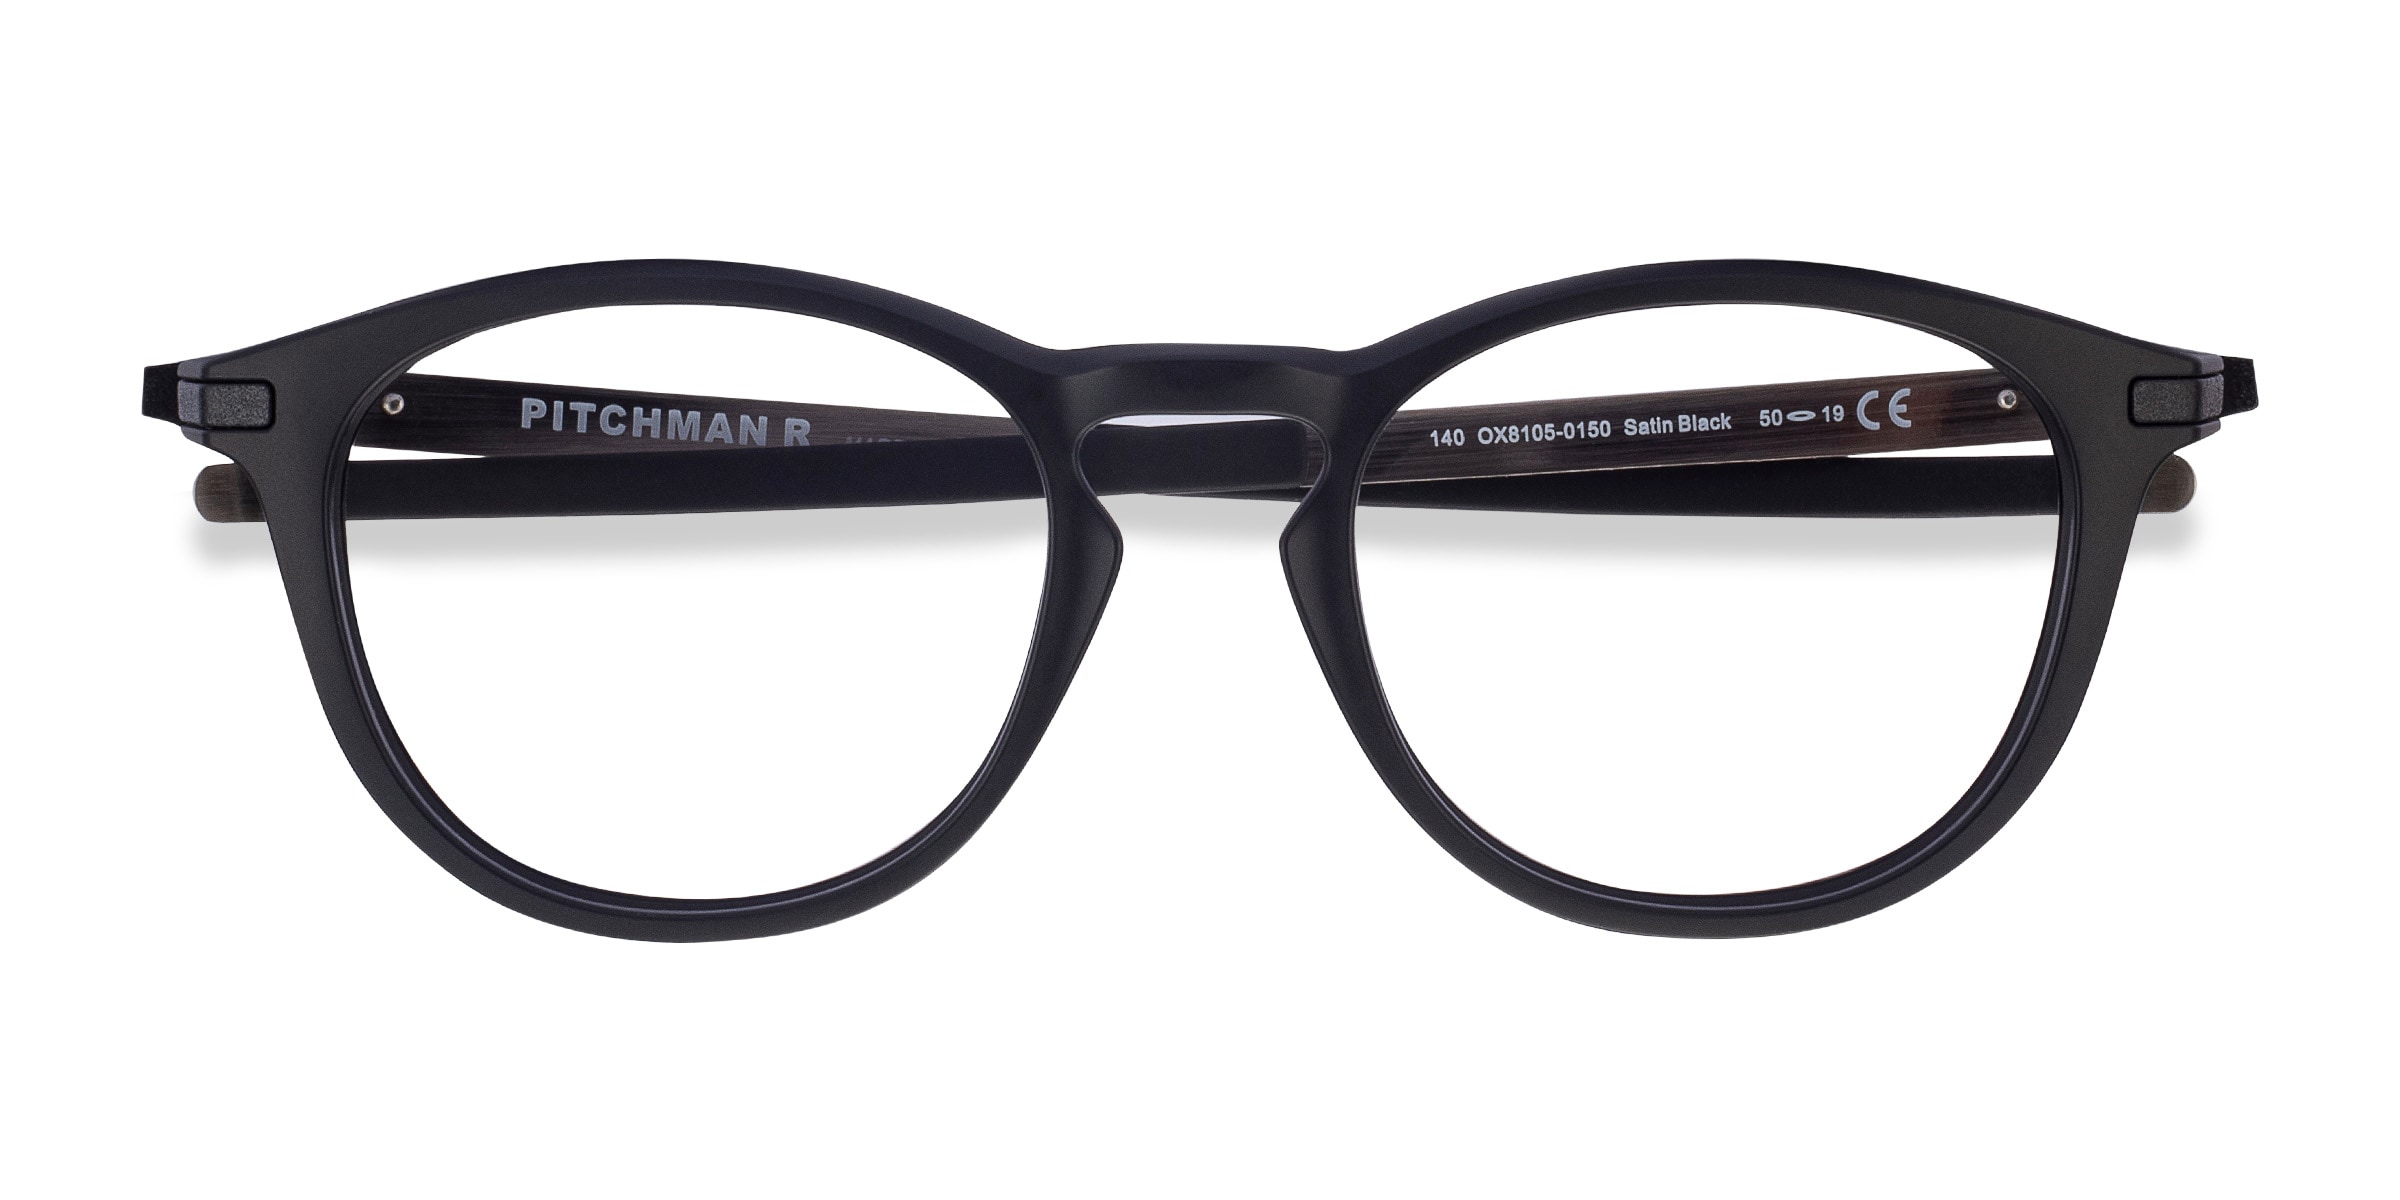 Oakley Pitchman R - Round Satin Black Frame Glasses For Men | Eyebuydirect